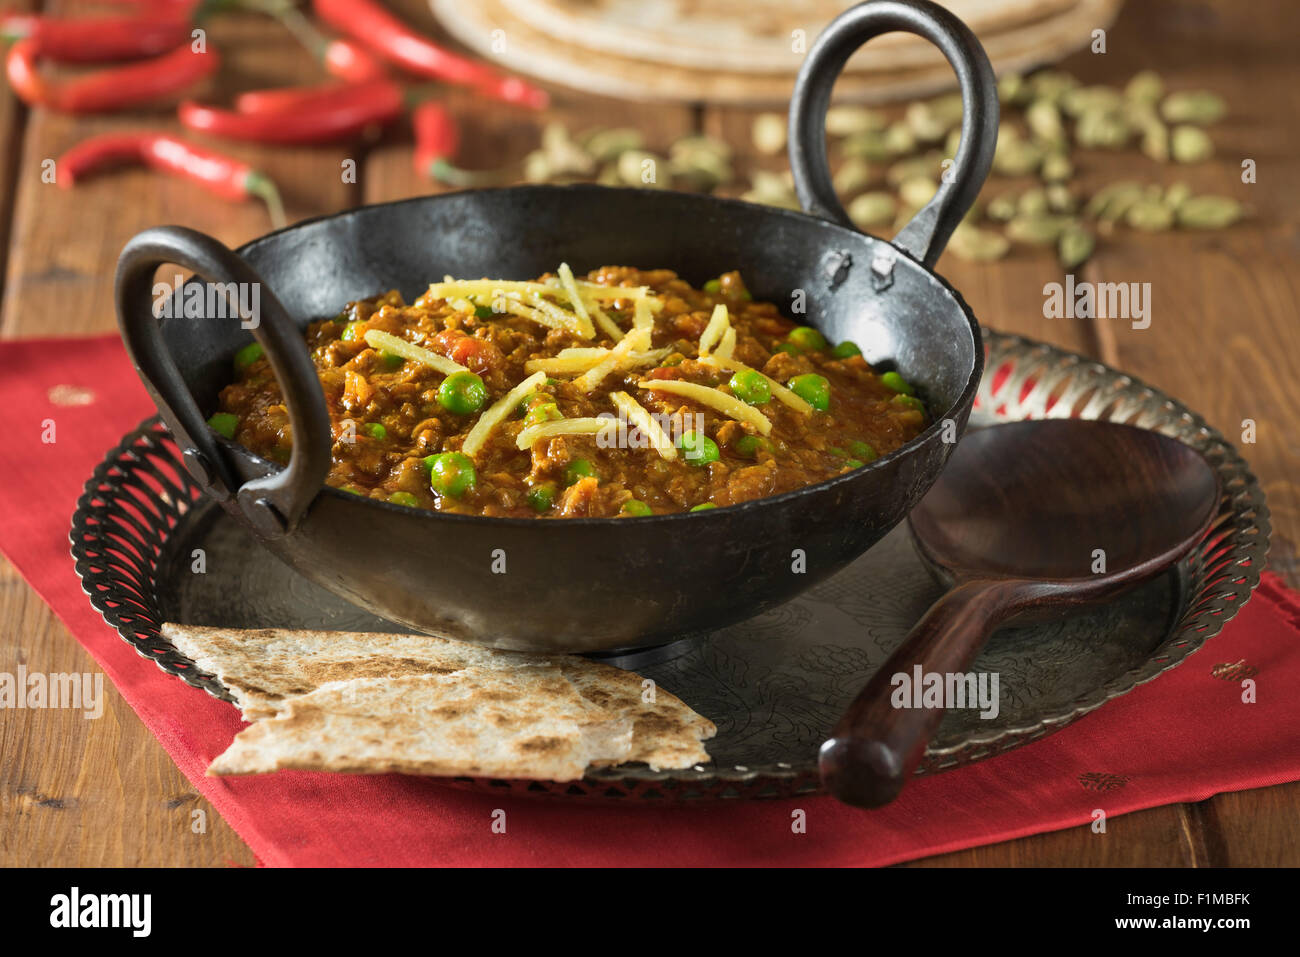 https://c8.alamy.com/comp/F1MBFK/keema-curry-spicy-minced-lamb-in-karahi-cooking-pot-india-food-F1MBFK.jpg